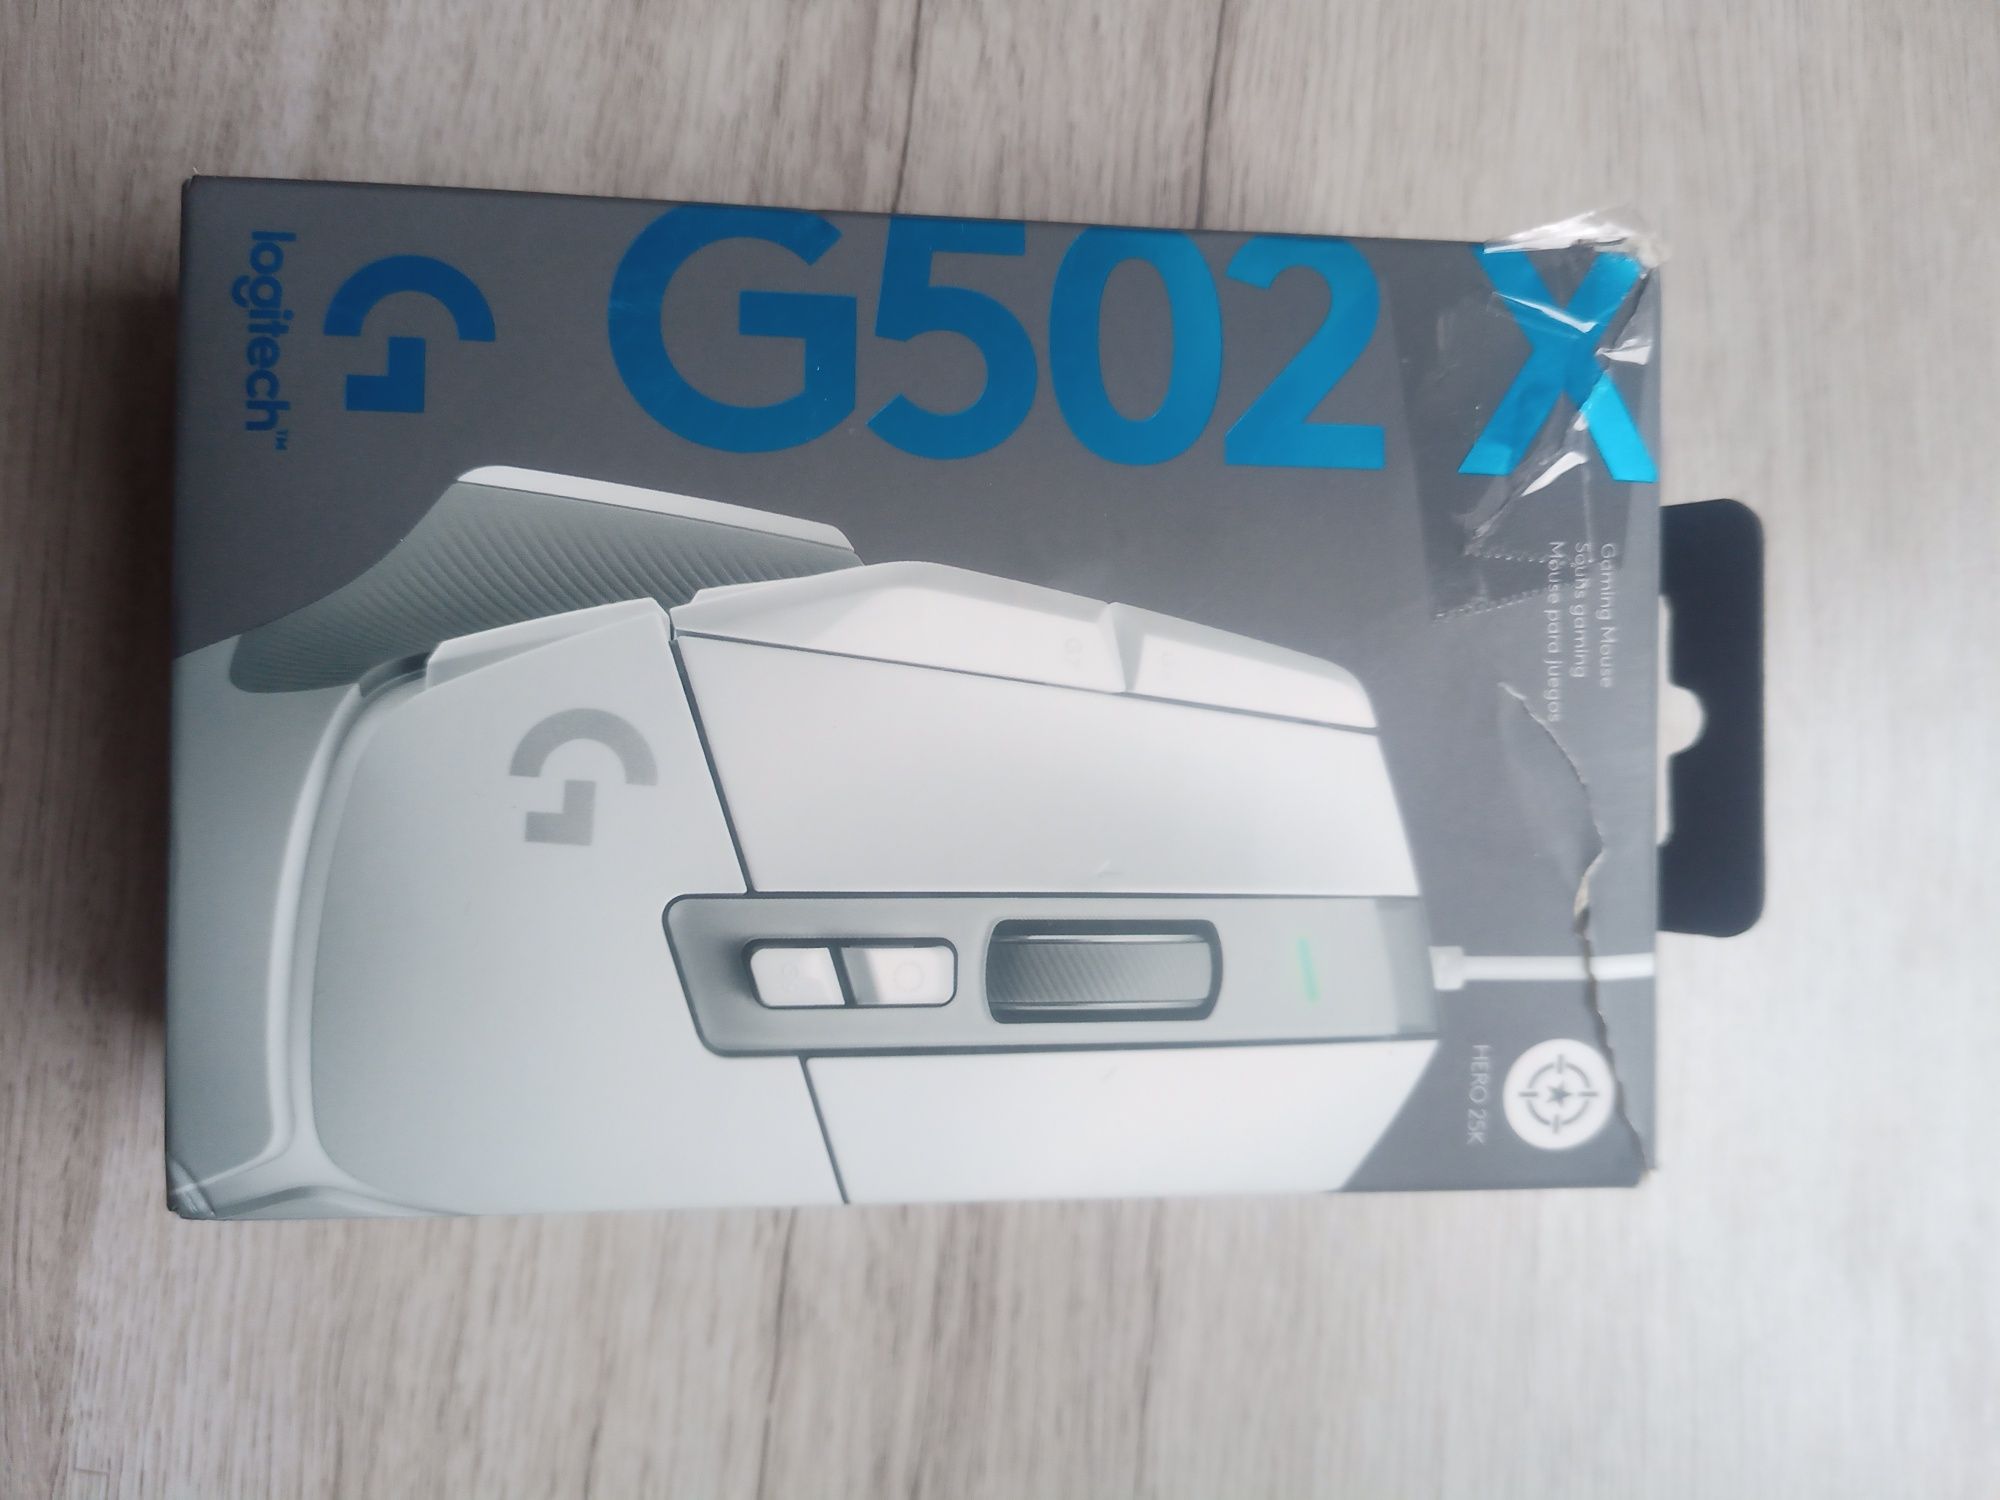 Logitech G502 X Biała